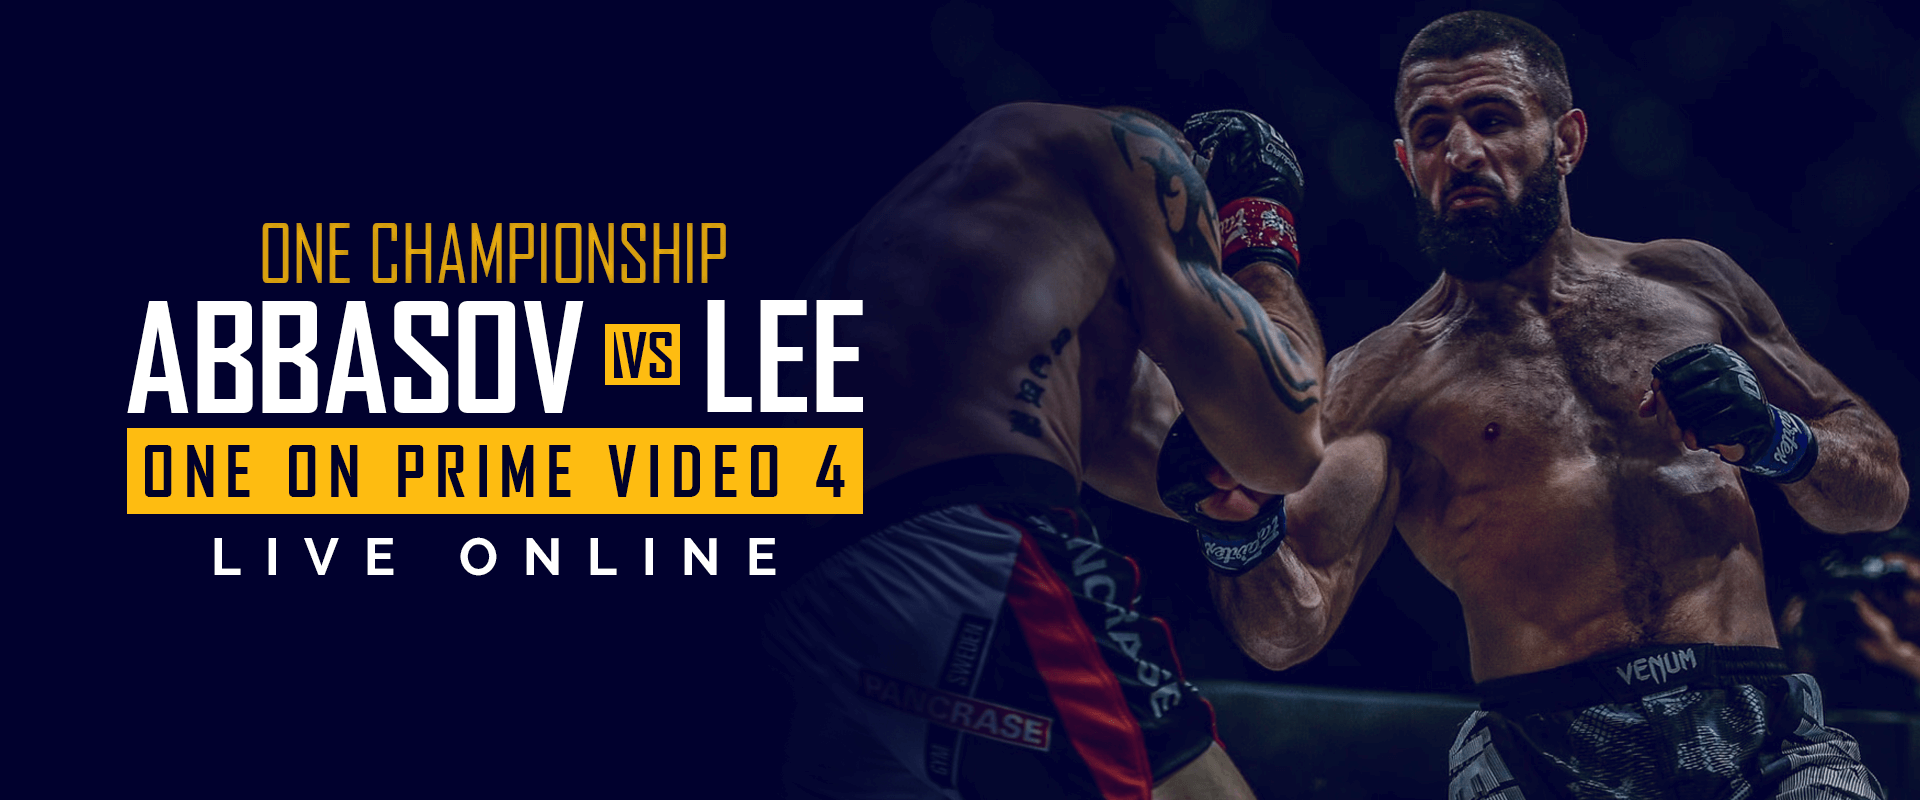 Oglądaj One Championship na żywo online – ONE ON W PRIME VIDEO 4 – ABBASOV kontra LEE